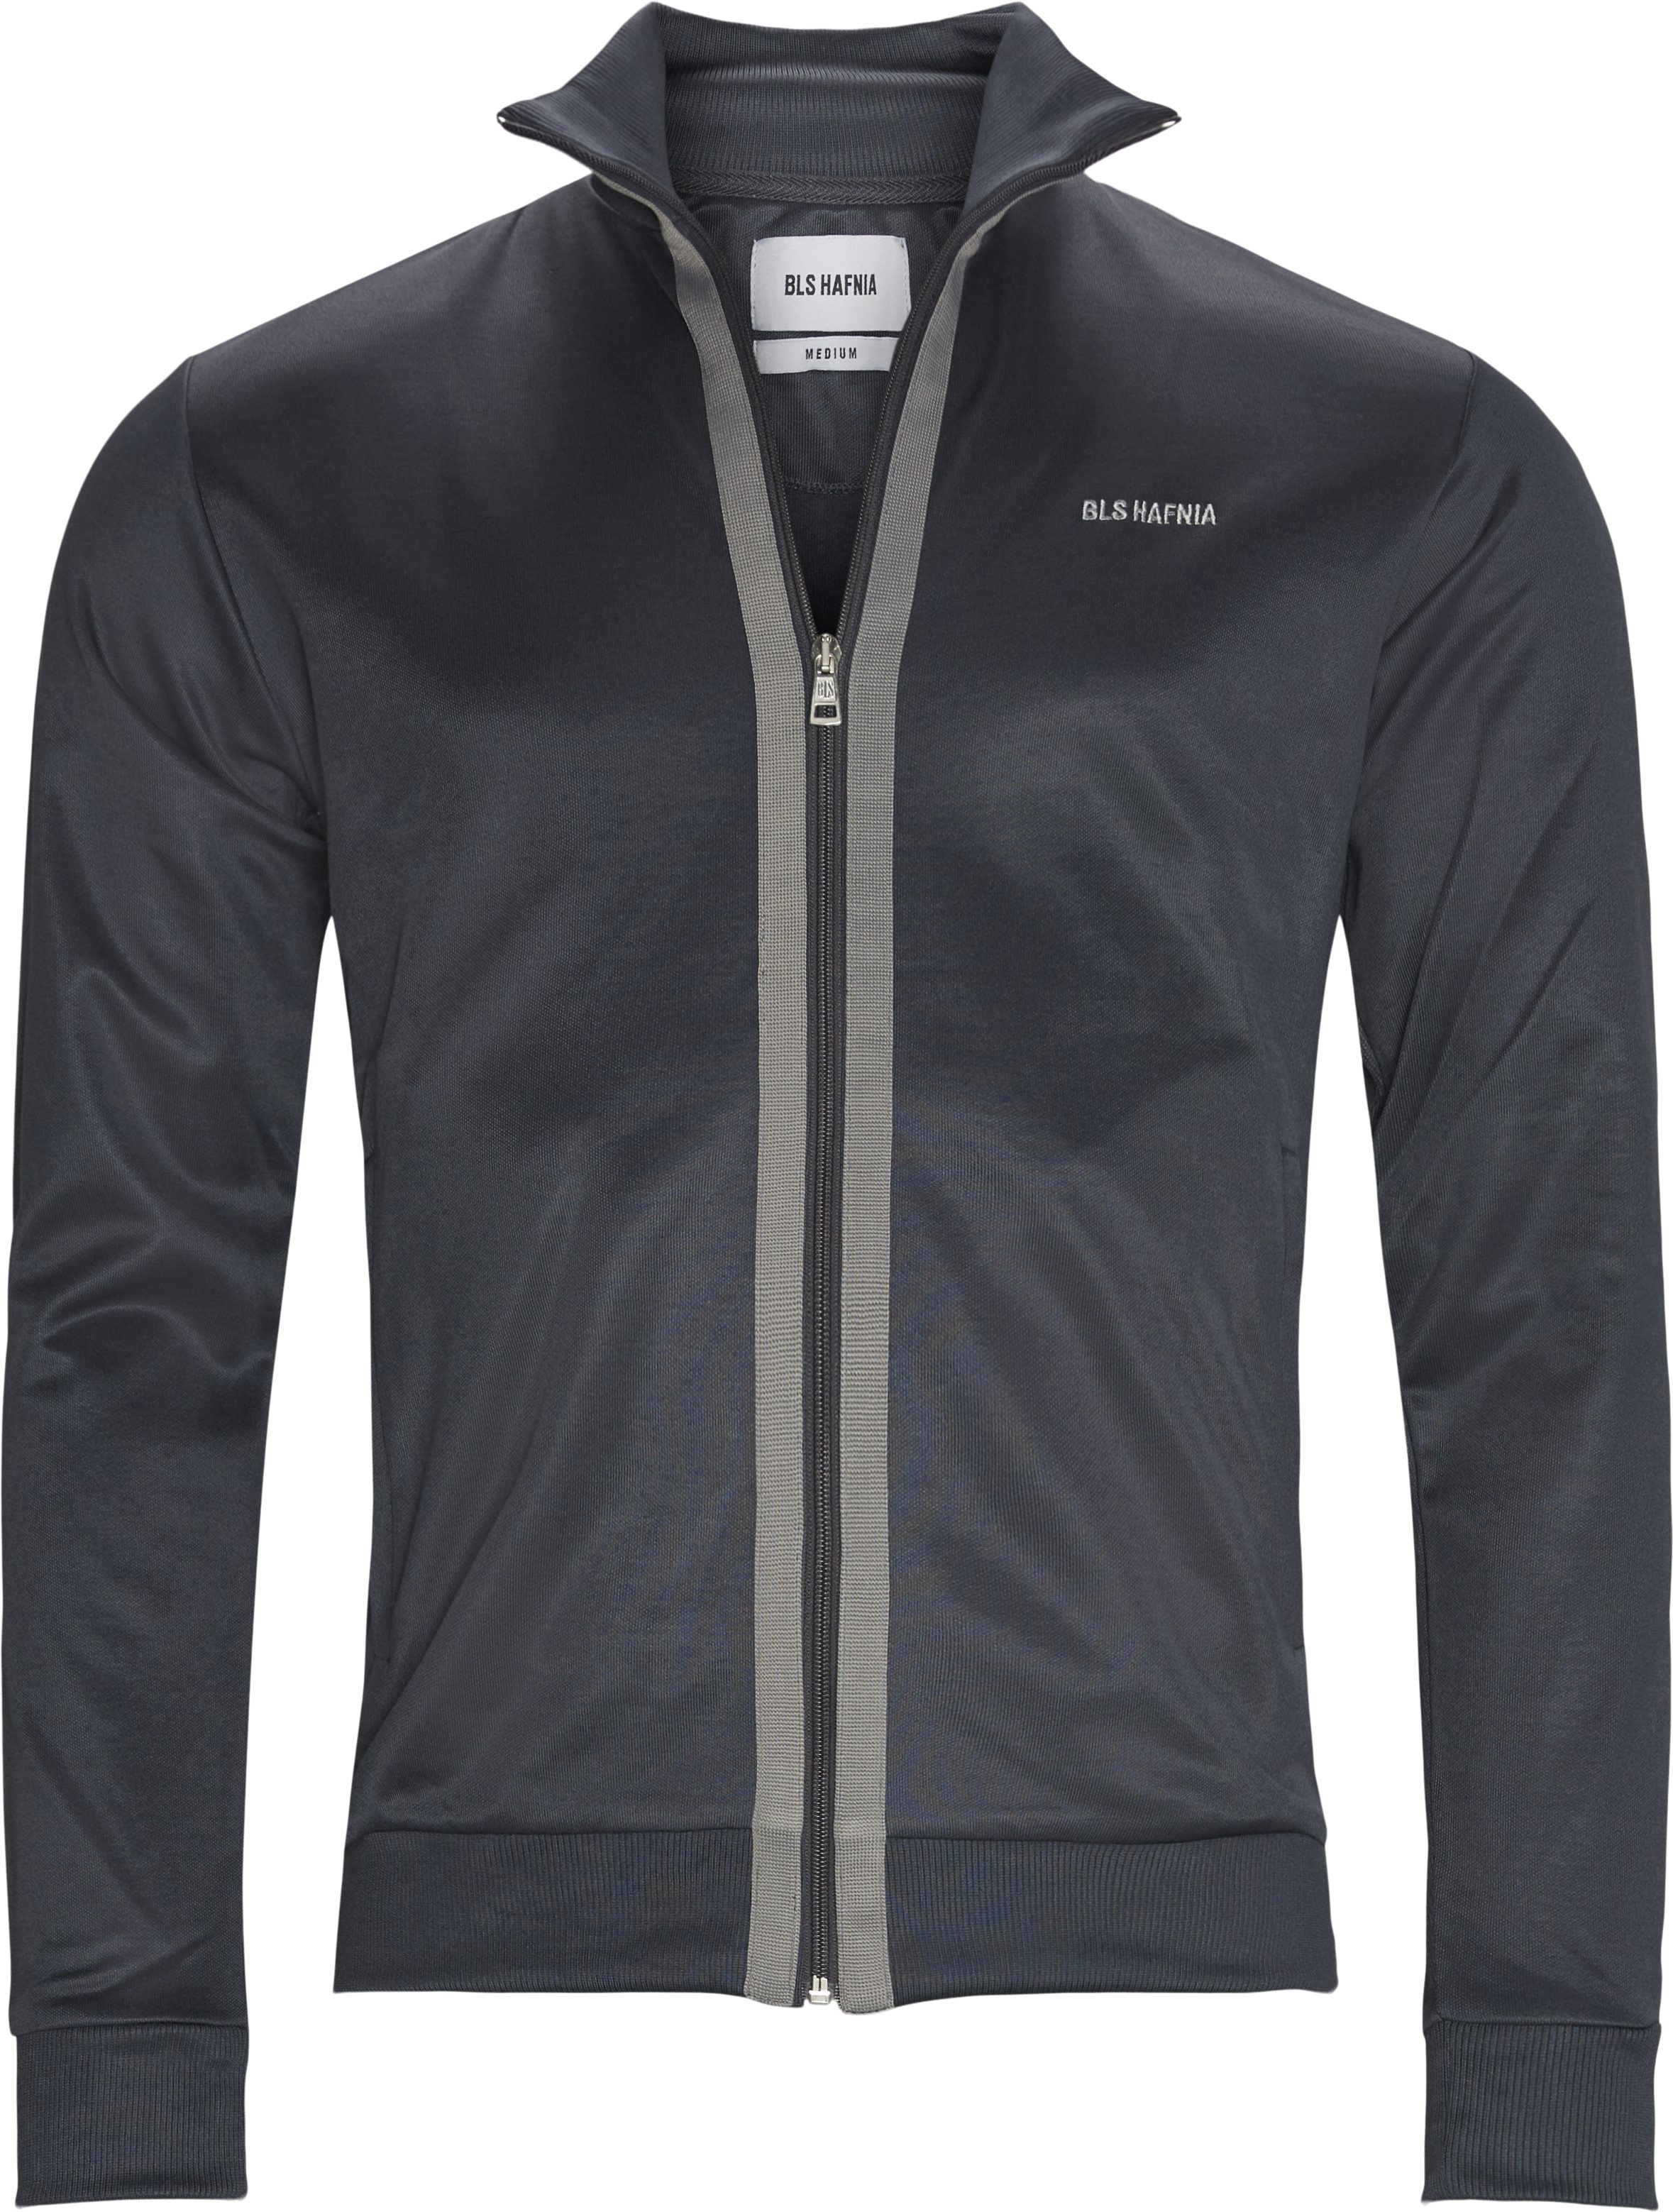 Martinez Stripe Jacket - Sweatshirts - Regular fit - Grey